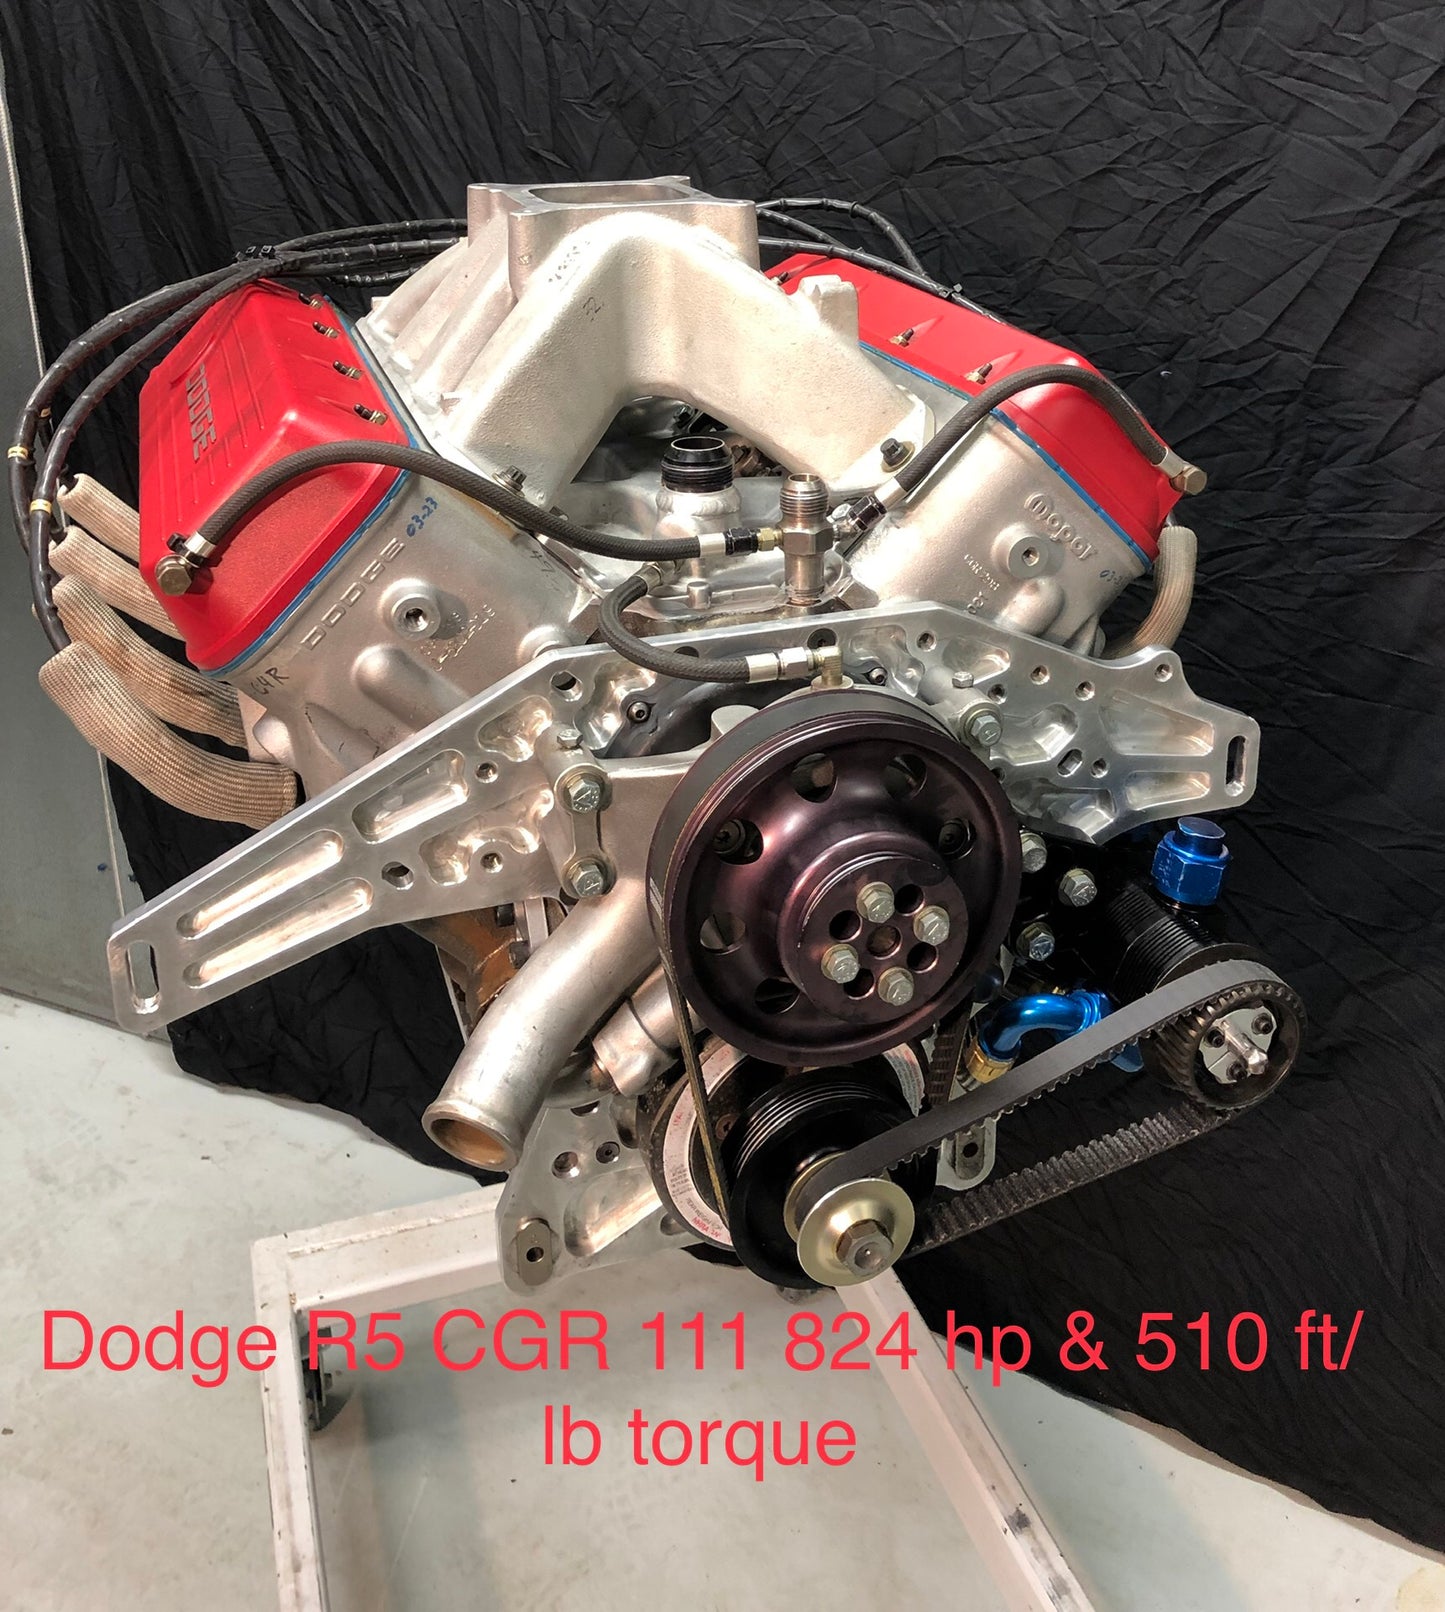 MTI Racing #CGR-111 Dodge R5 Engine  824hp & 510 ft/lb of Torque